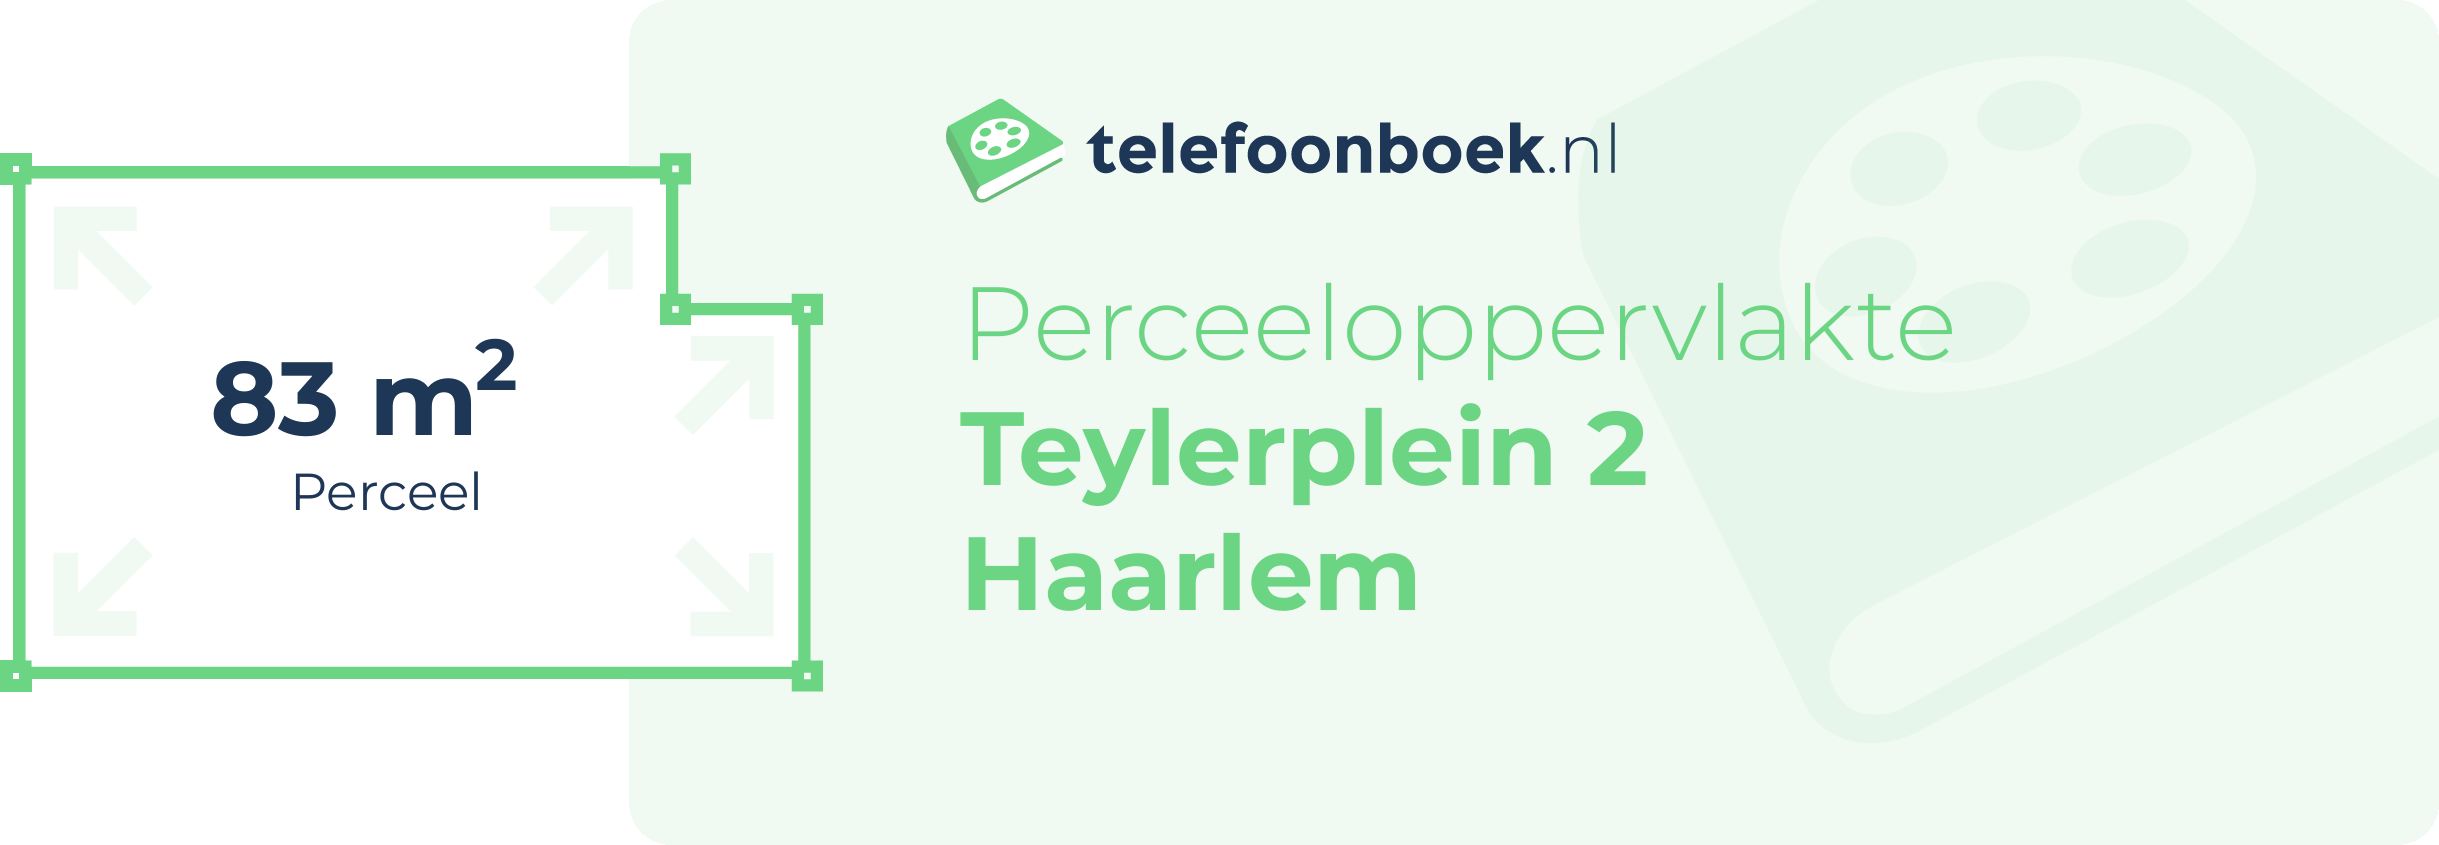 Perceeloppervlakte Teylerplein 2 Haarlem